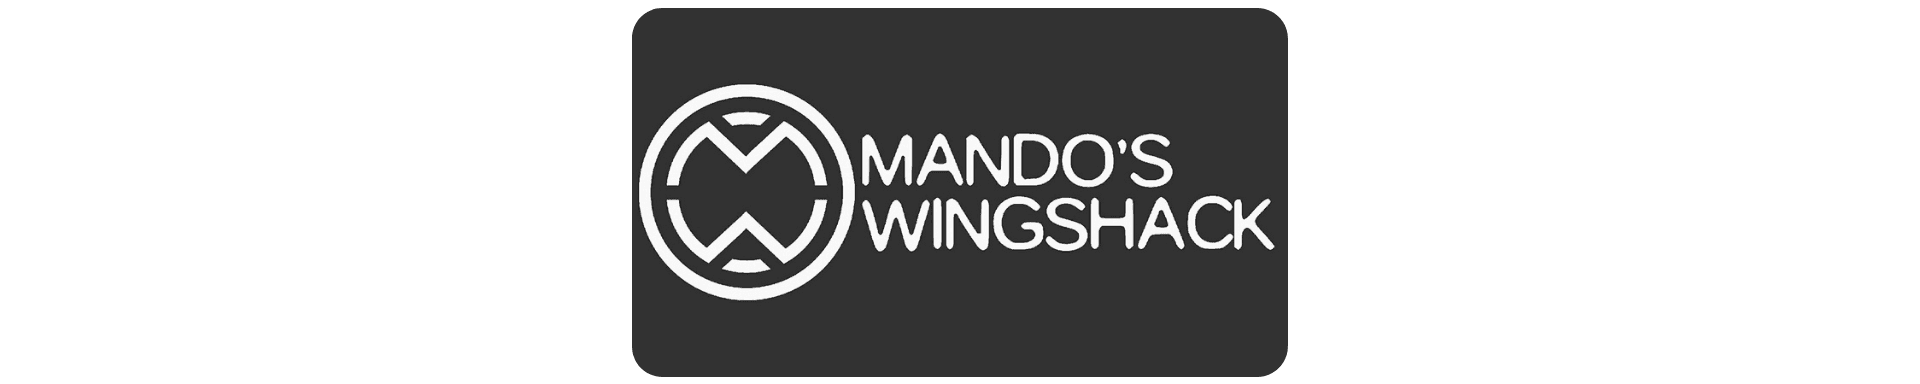 Mando's Wing Shack logo